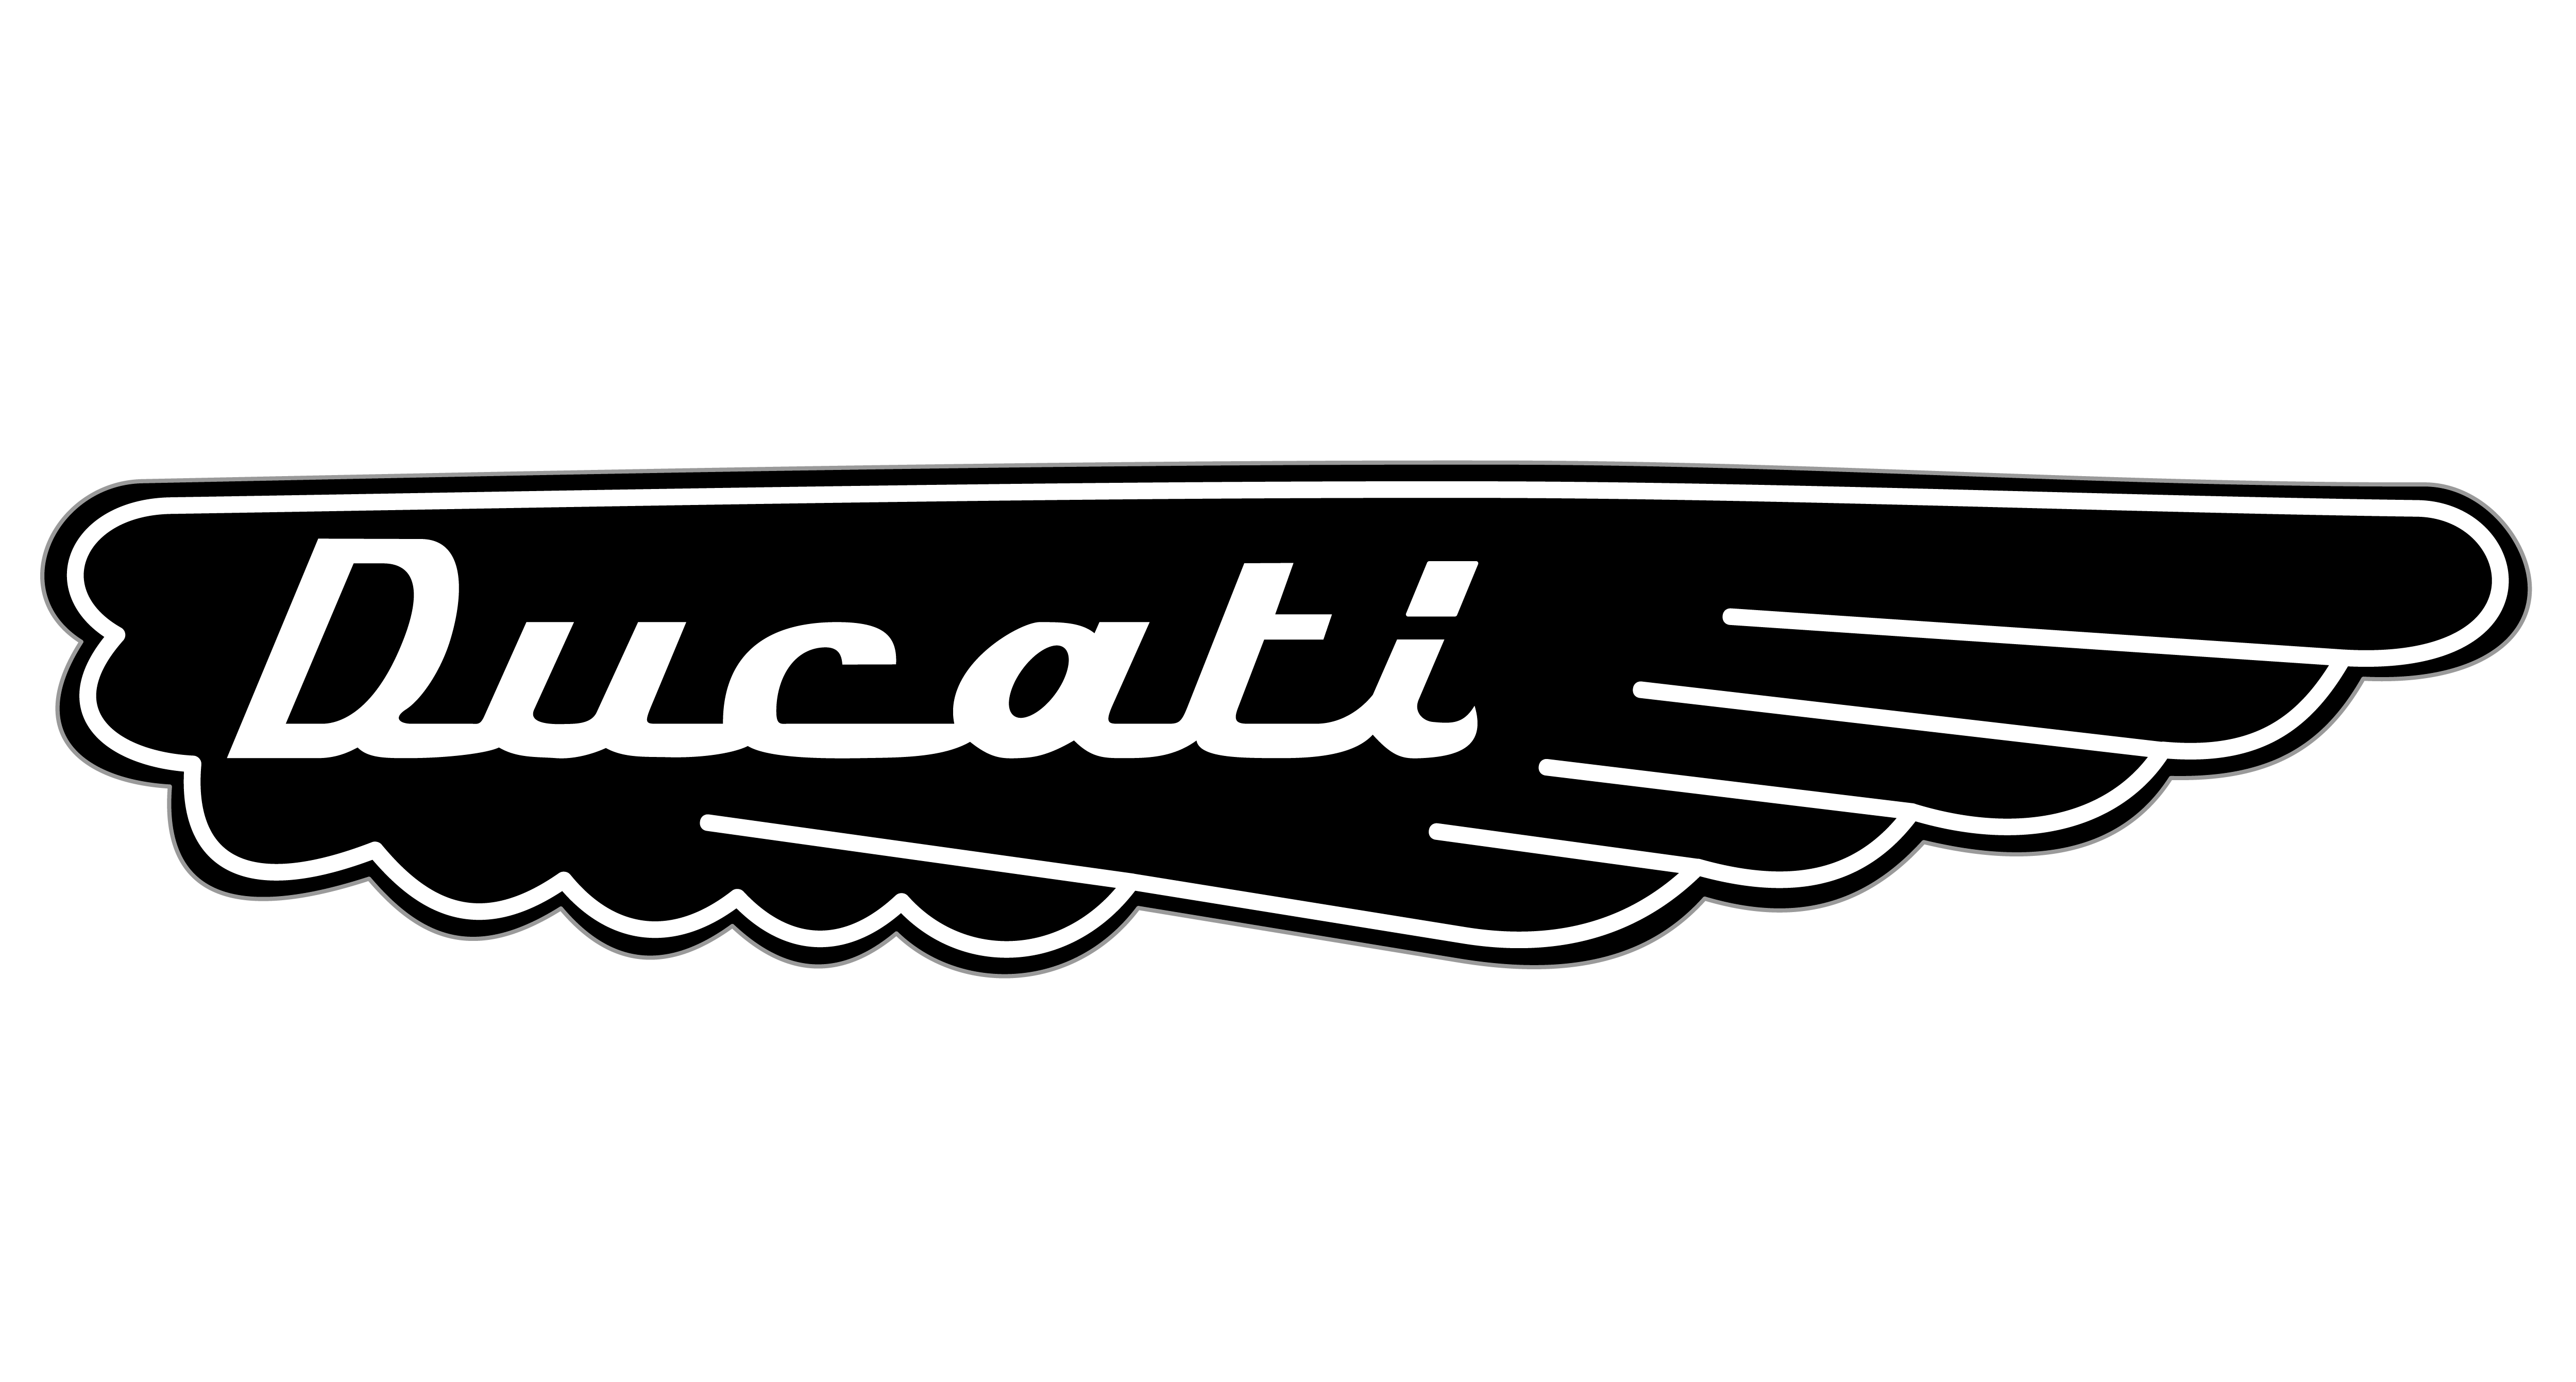 Ducati Logo - Ducati Logo 1967 | Motorcycle Logos | Pinterest | Ducati, Motorcycle ...